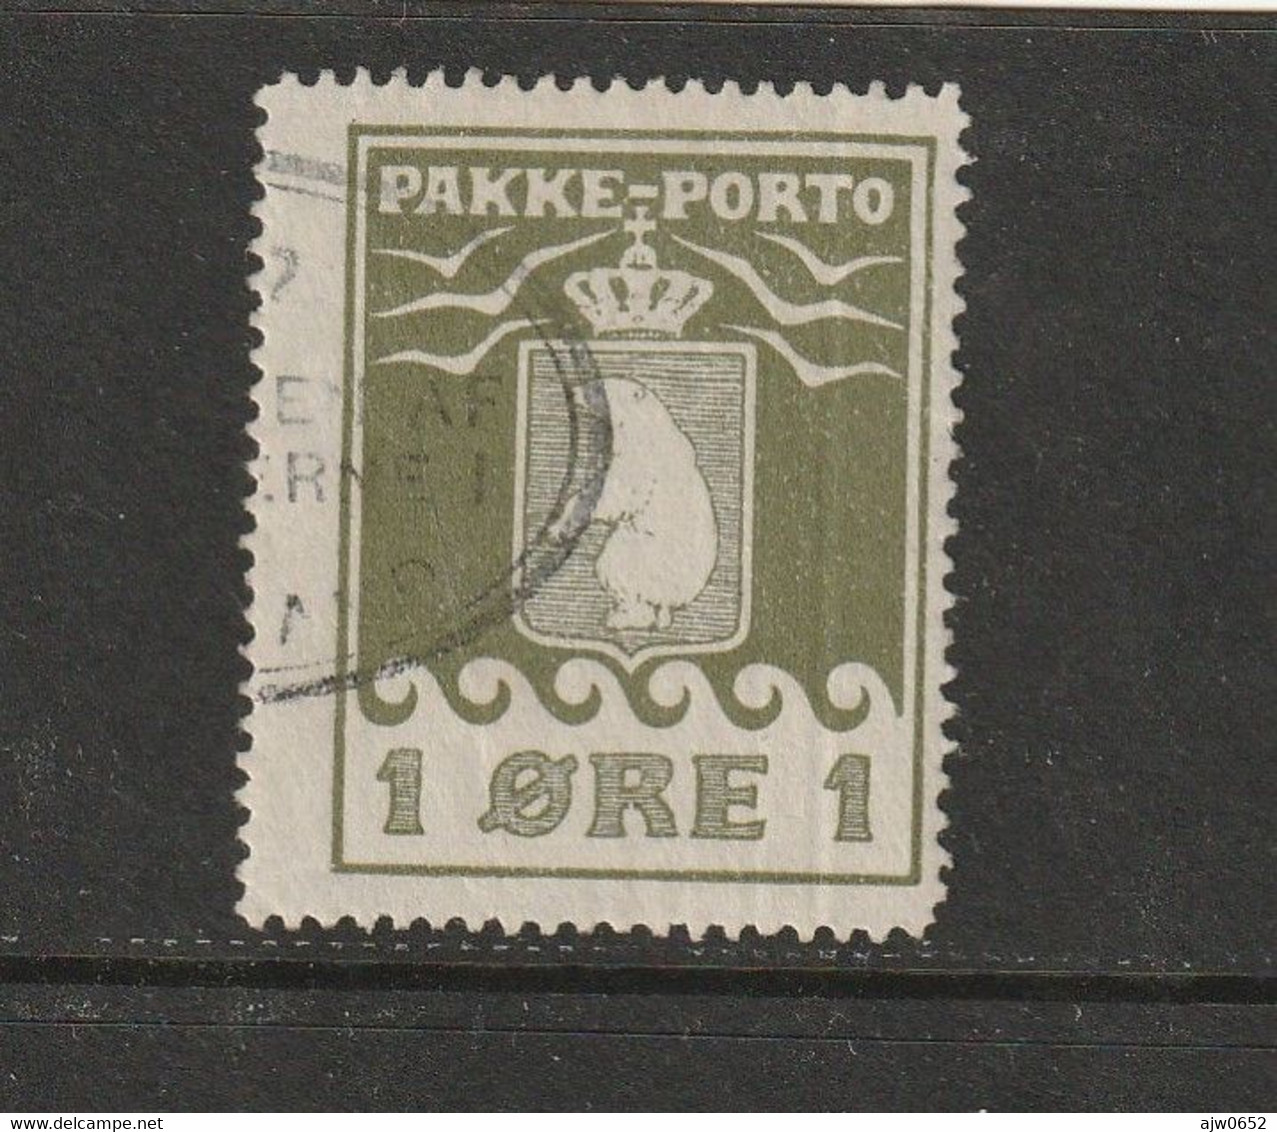 1924 1 ORE THIRD PRINT FINE USED - Spoorwegzegels